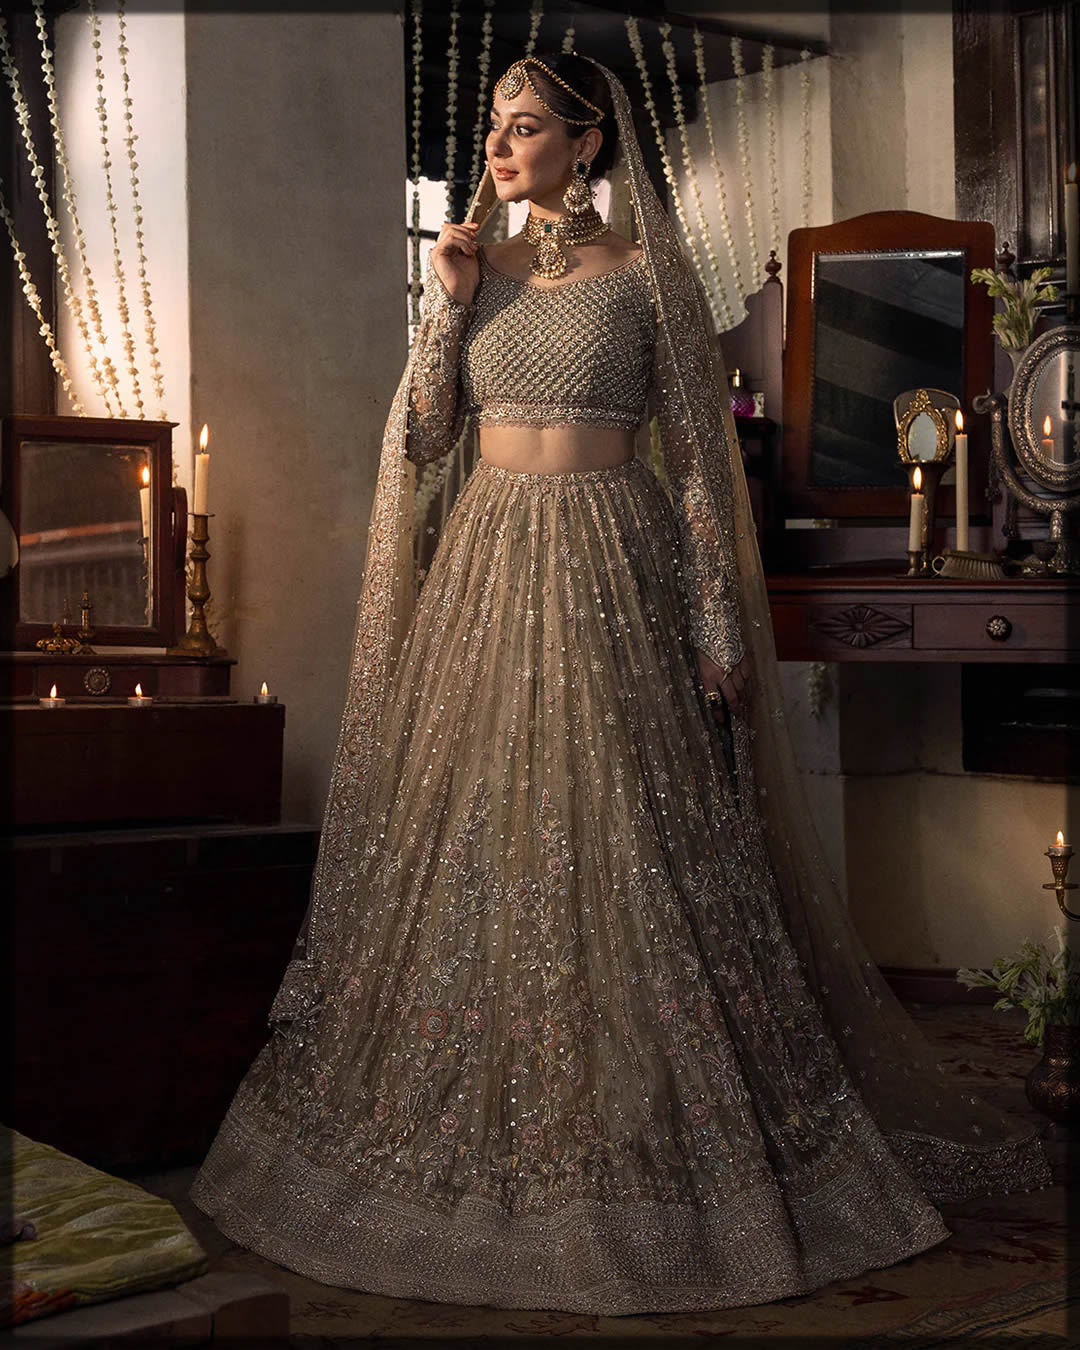 Faiza saqlain pakistani wedding dresses ft Hania amir